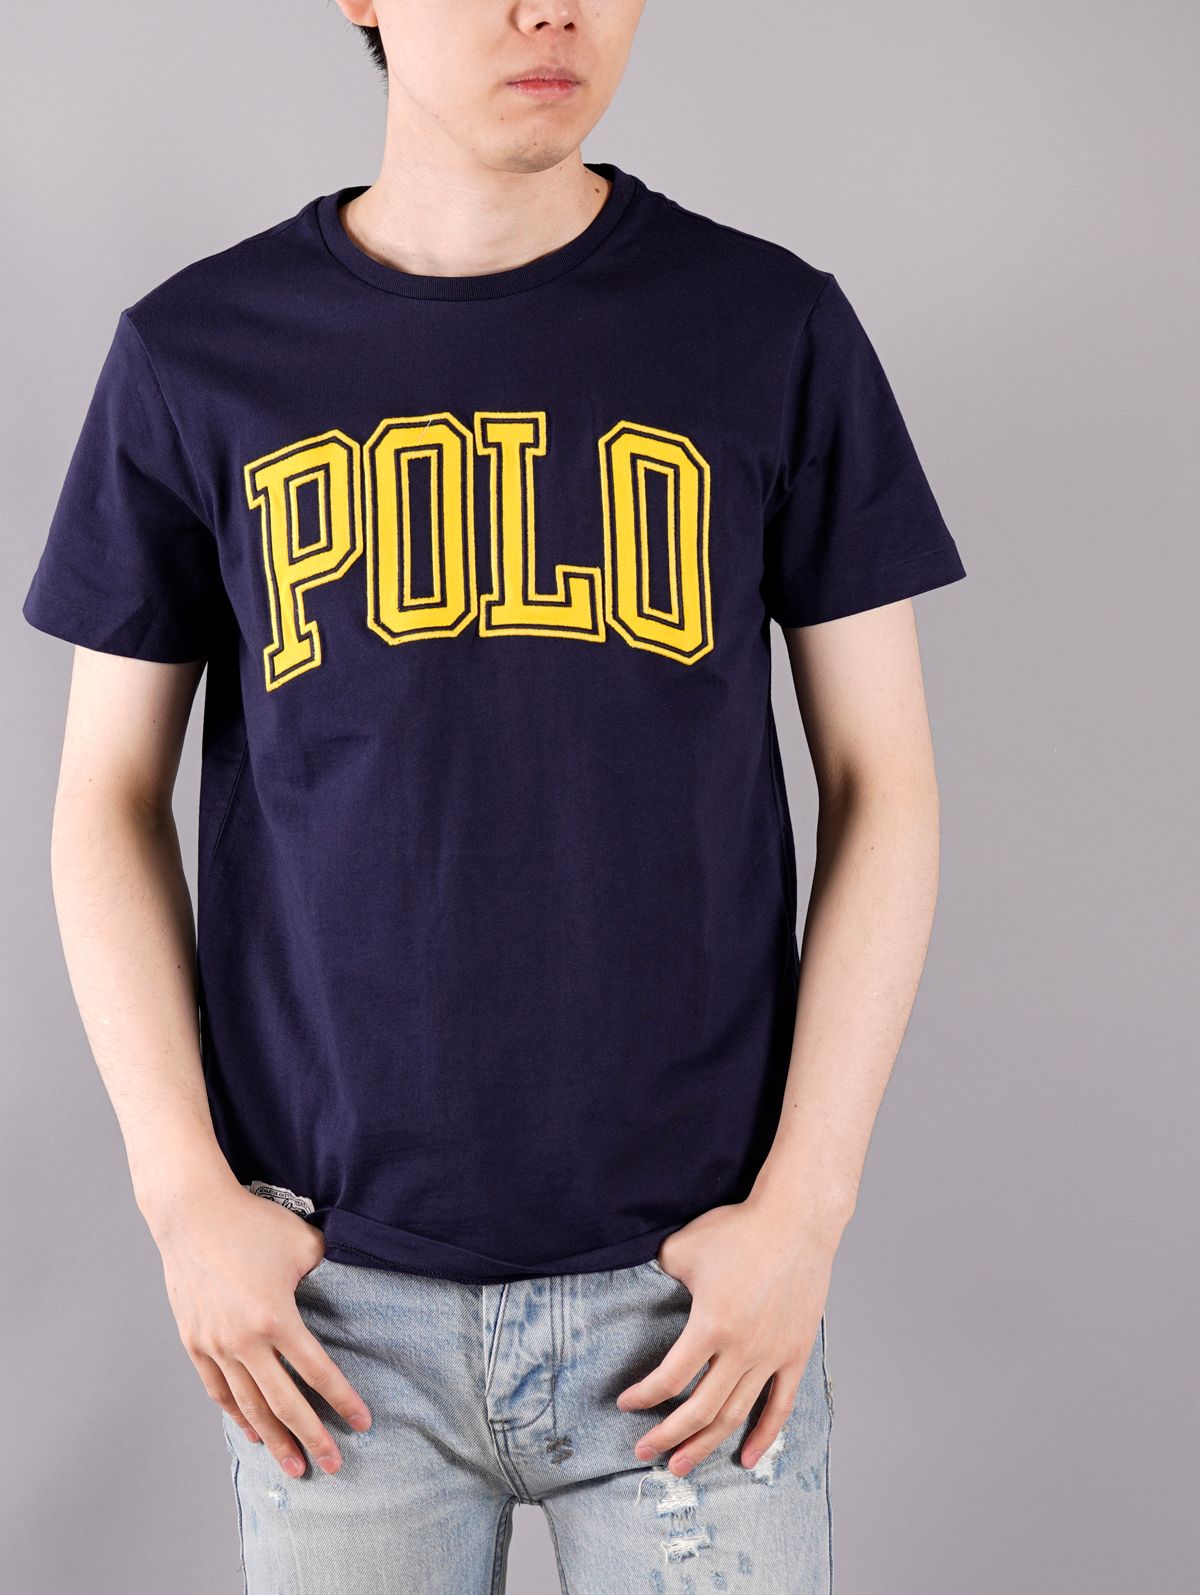 Verovering bezig motto Polo Ralph Lauren - CUSTOM SLIM FIT T-SHIRT / カスタムスリムフィットTシャツ (グレー) |  Confidence